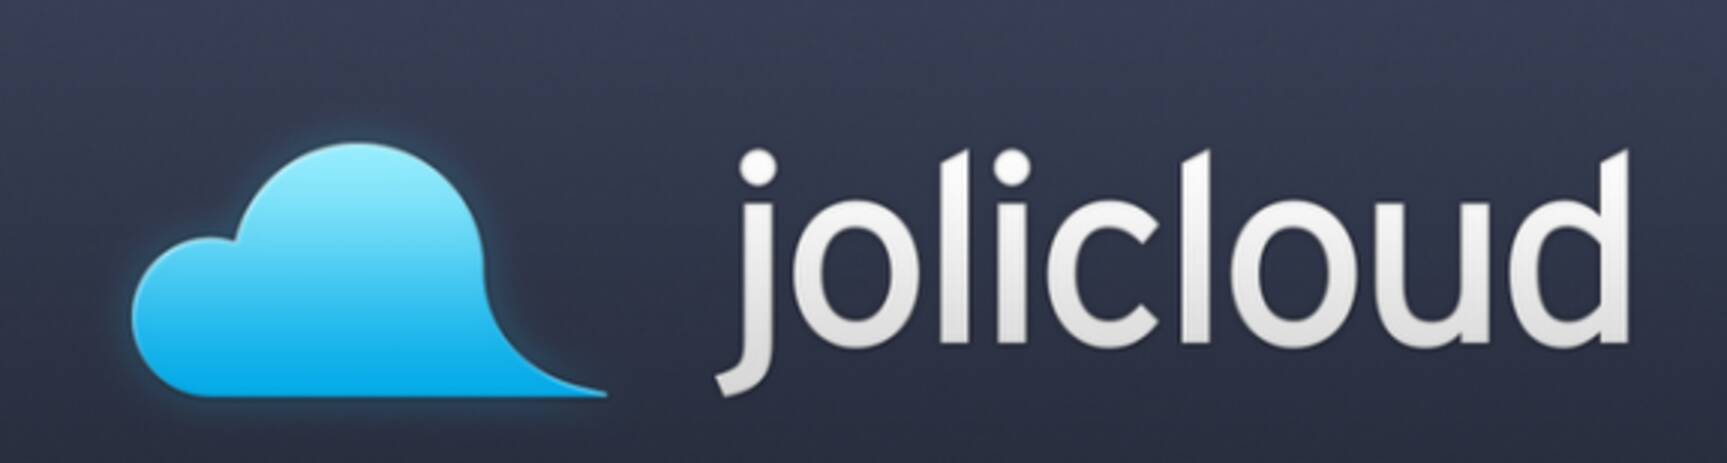 Webアプリでデスクトップ環境を構築 Jolicloud Desktop 12年7月5日 エキサイトニュース